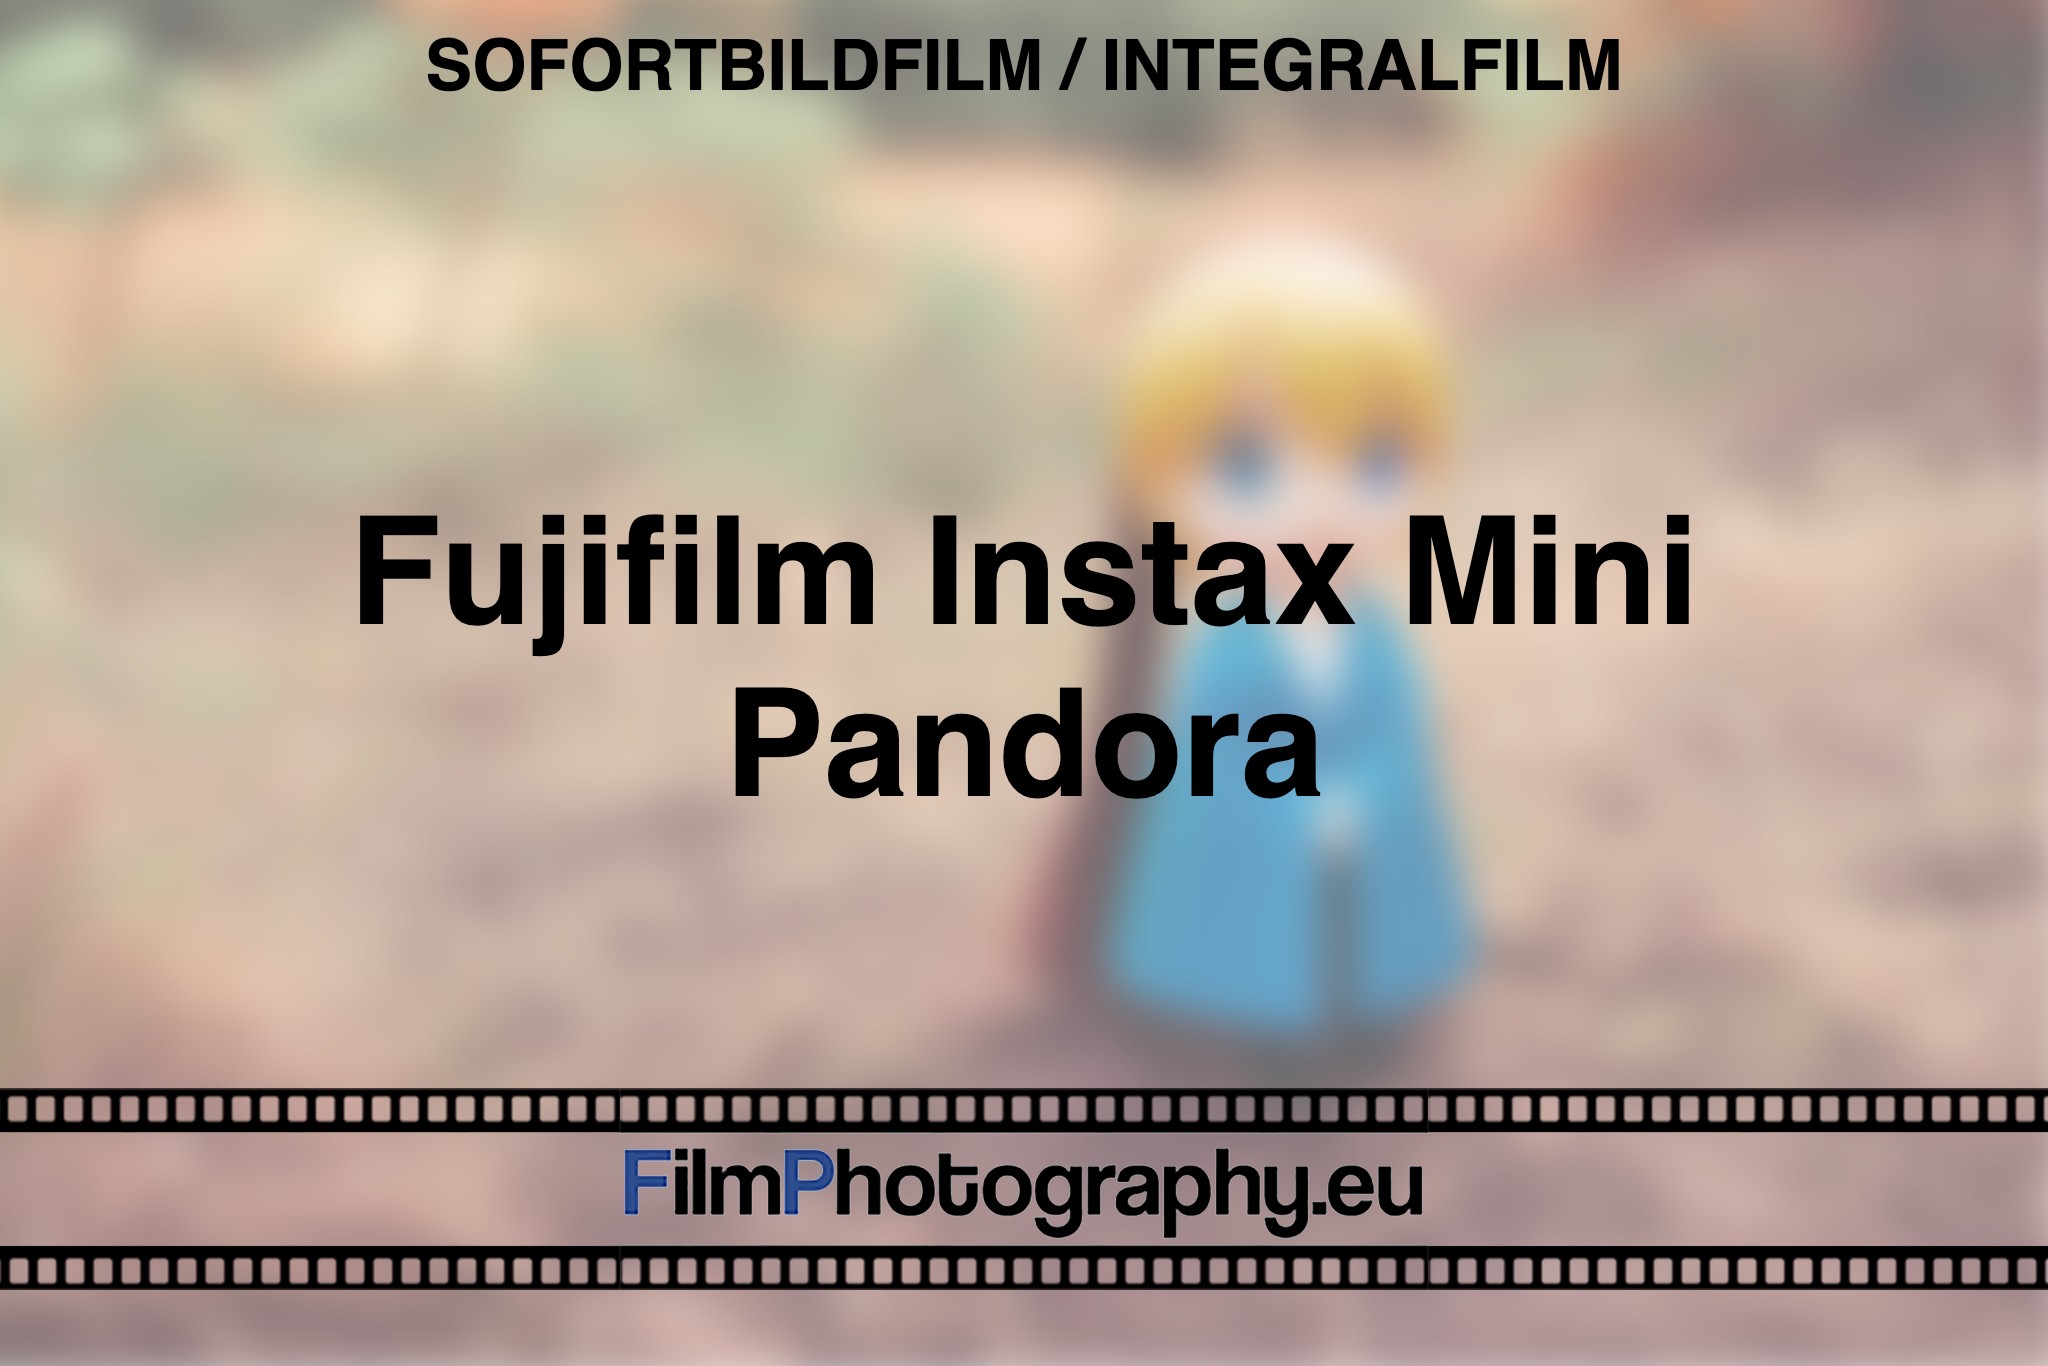 fujifilm-instax-mini-pandora-sofortbildfilm-integralfilm-fp-bnv